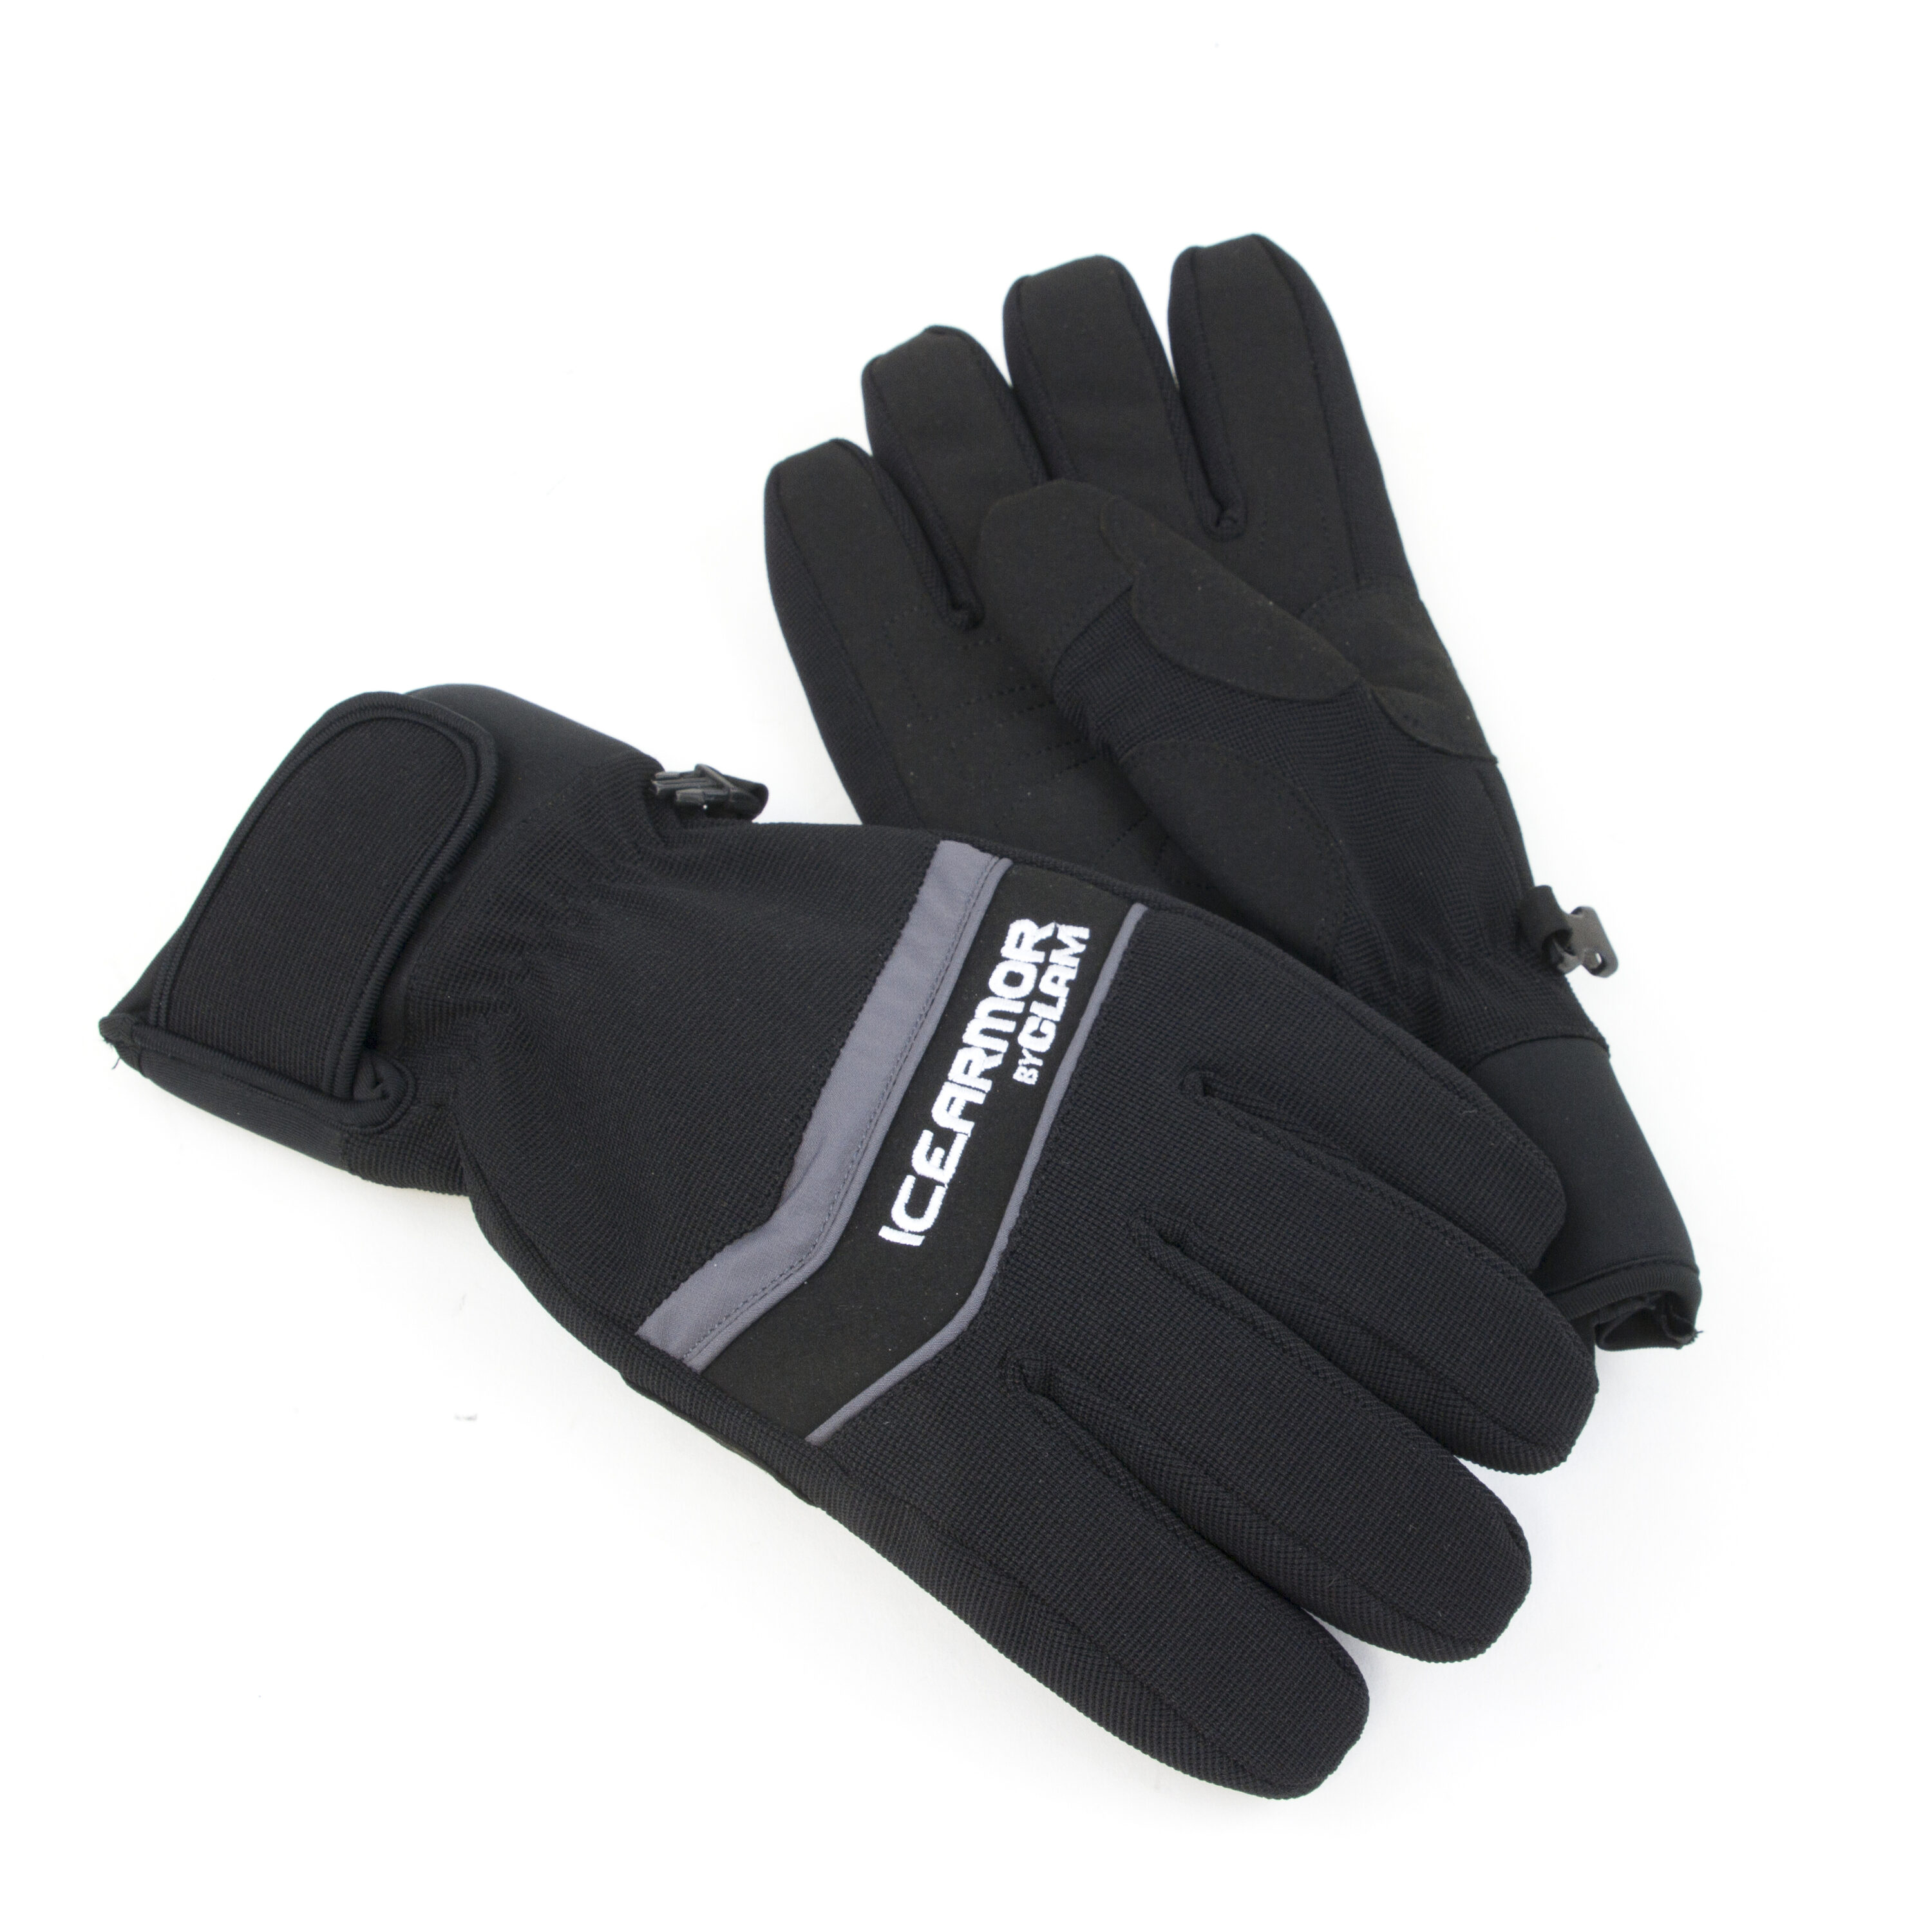 Clam Outdoors Edge Men's Ice Fishing Gloves - Black, Adult Medium